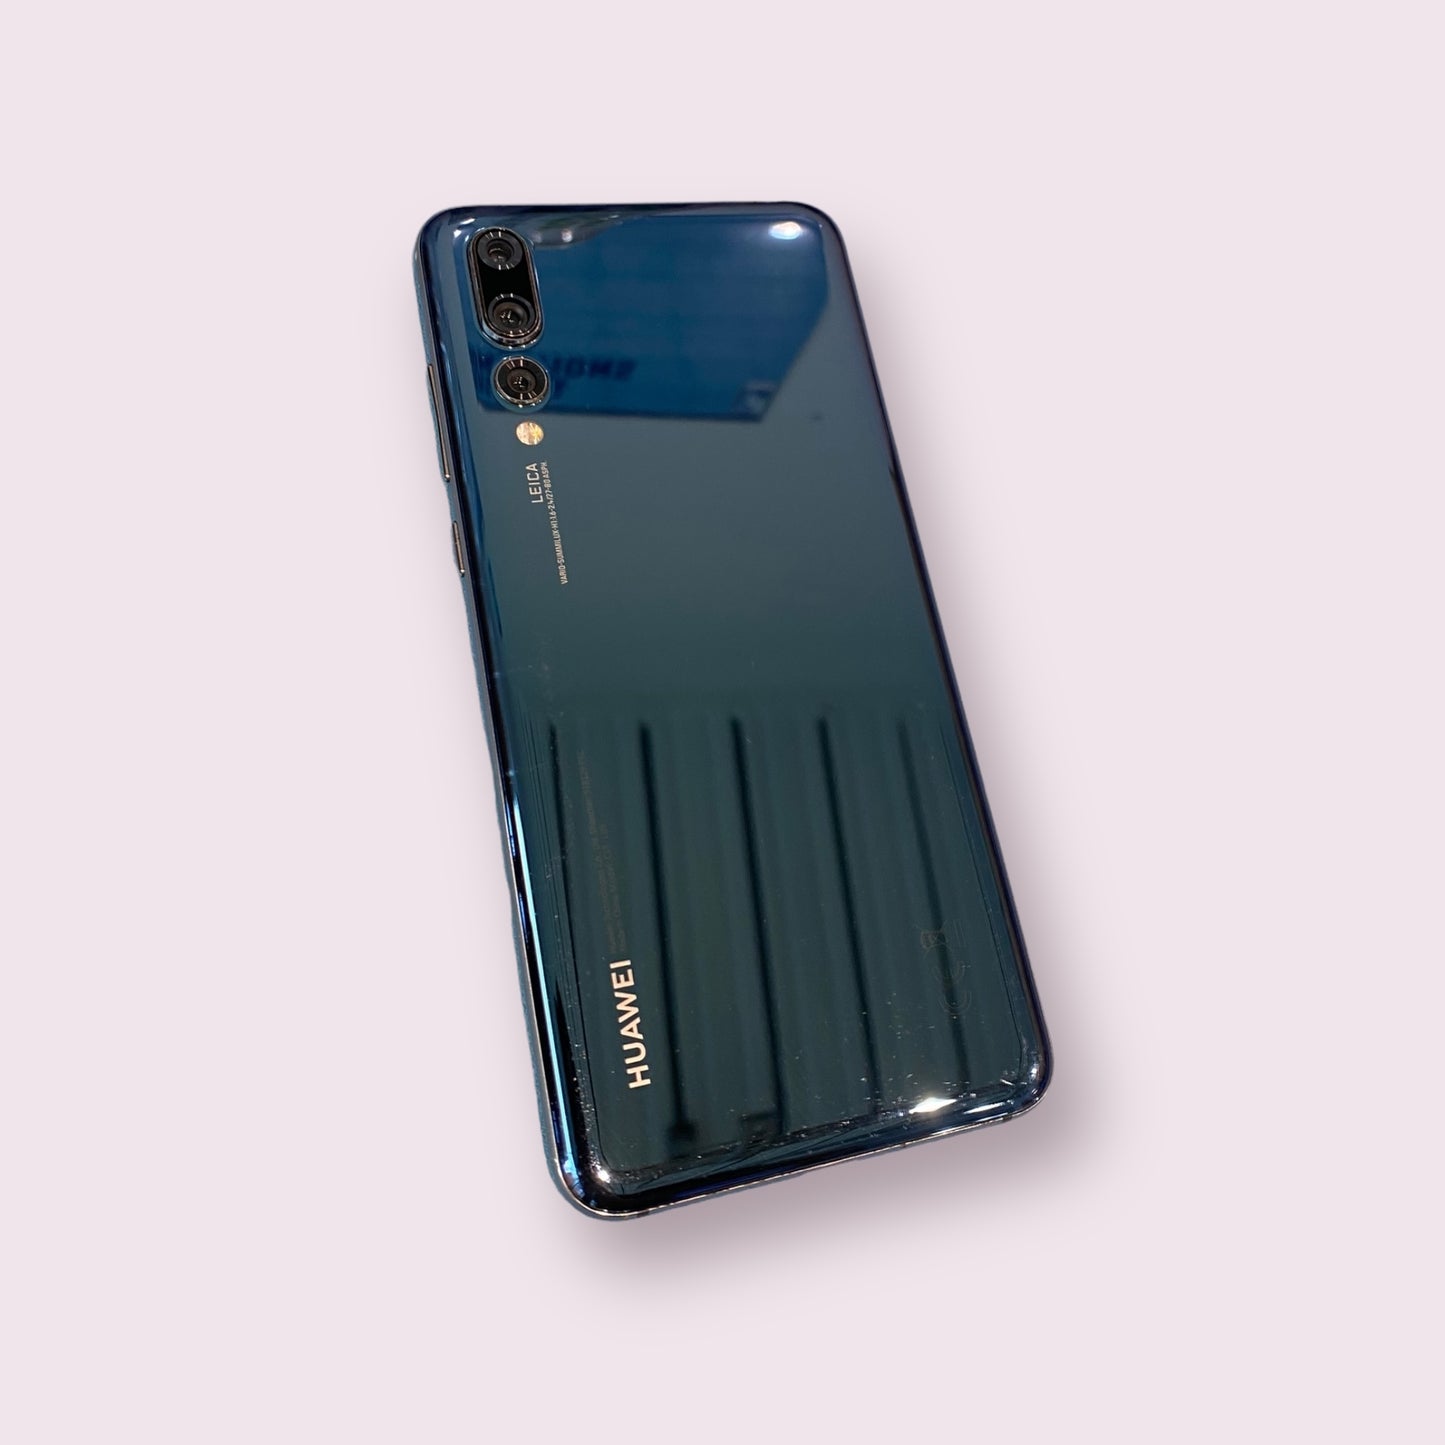 Huawei P20 Pro 128GB Midnight Blue Unlocked Smartphone - Grade B